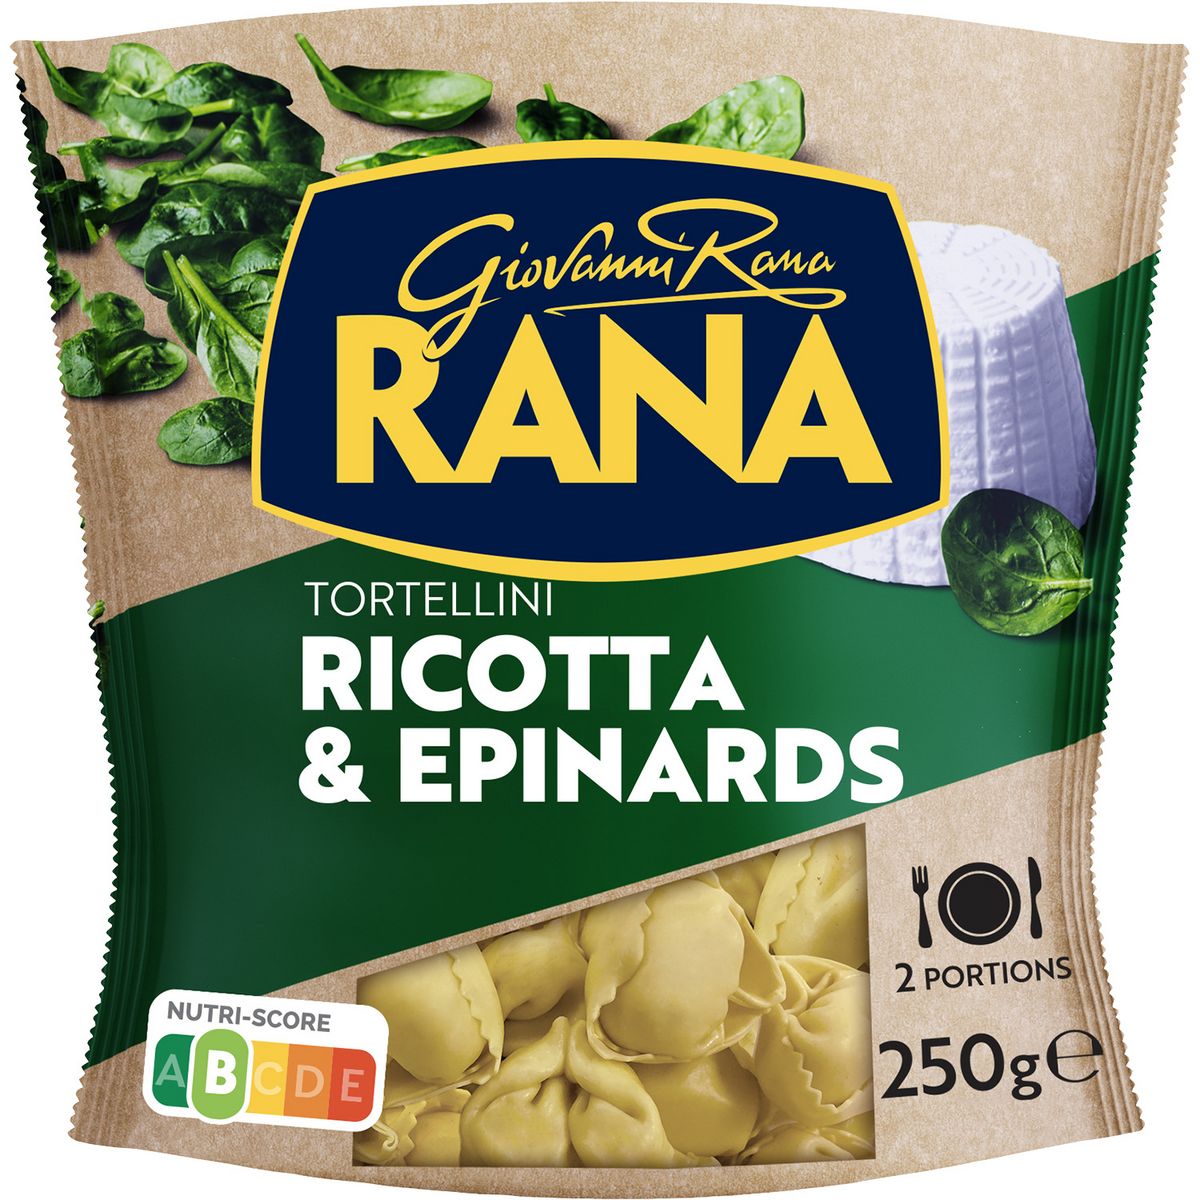 RANA Tortellini ricotta & épinards 2 portions 250g